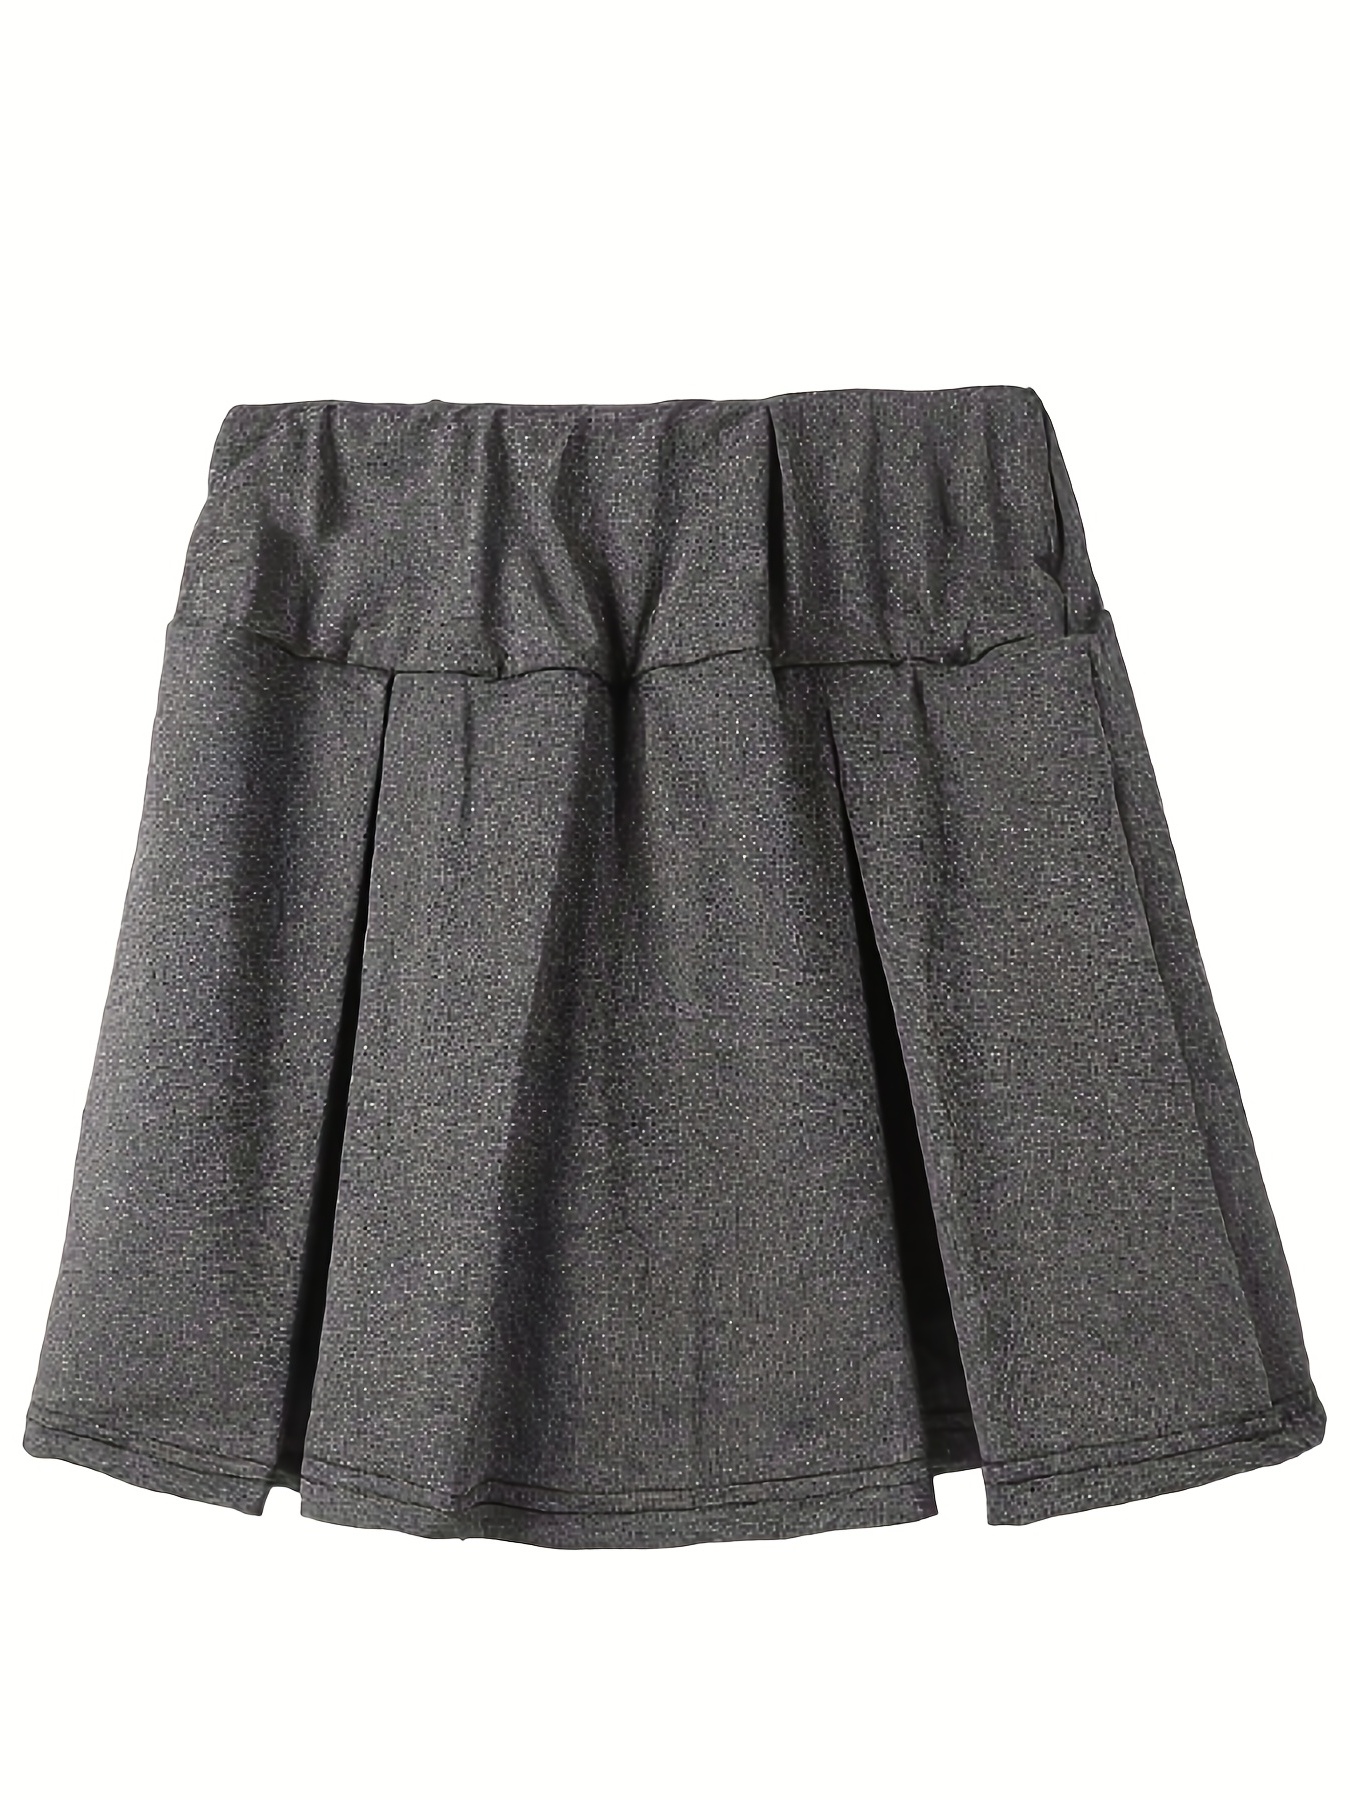 2pcs 2 in 1 sports short skirts for running golf tennis fashion elastic waist active skorts womens activewear details 4